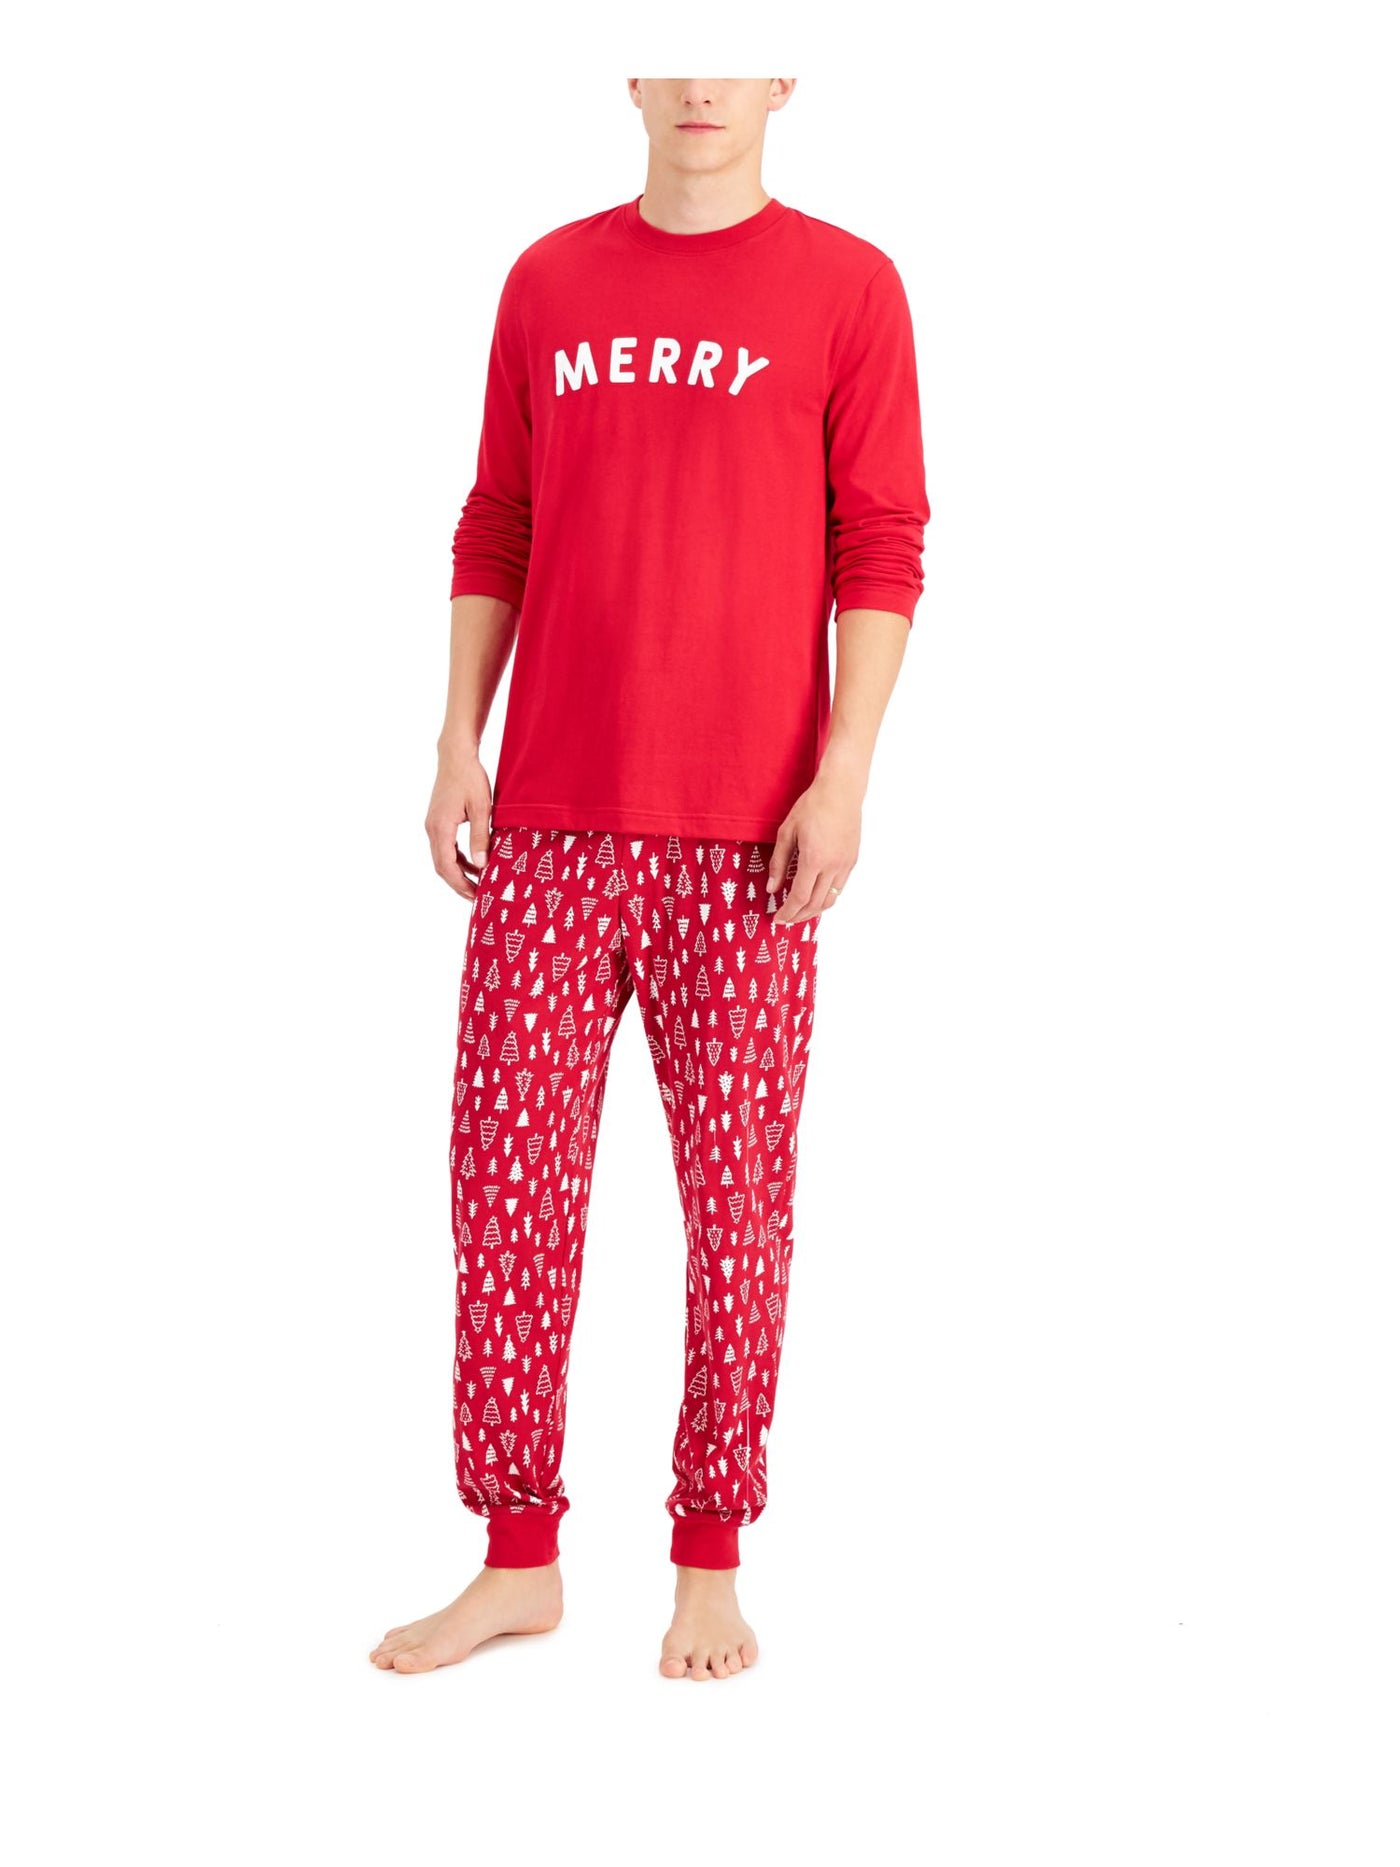 FAMILY PJs Intimates Red Cuffed Sleep Pants M